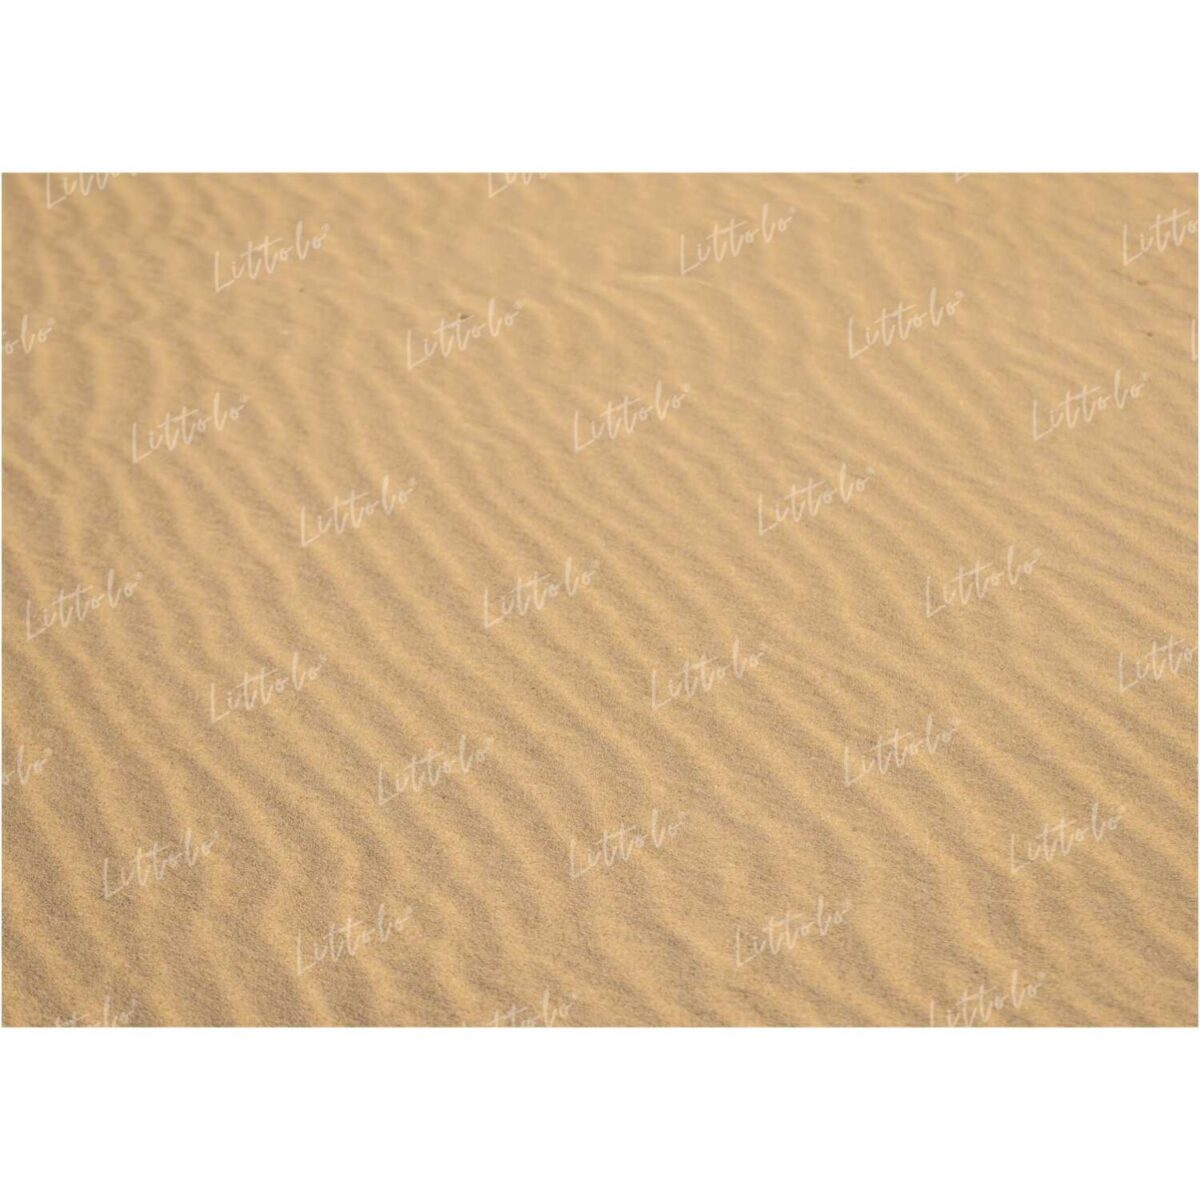 LB0210 Desert Sand Theme Backdrop